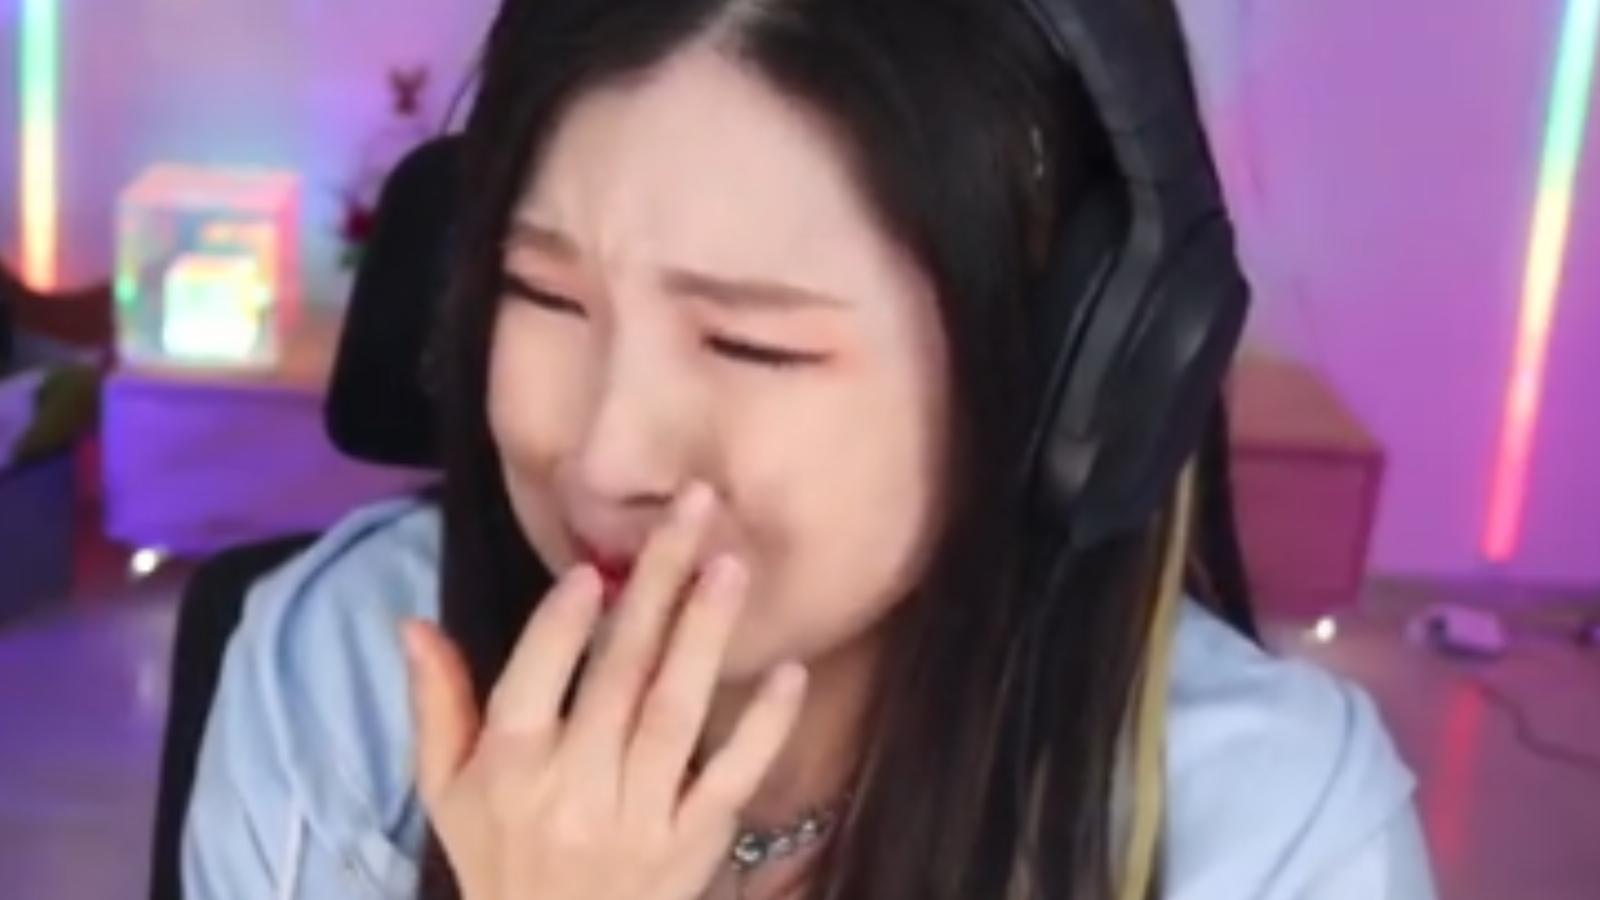 hachubby in tears over twitch korea shutdown